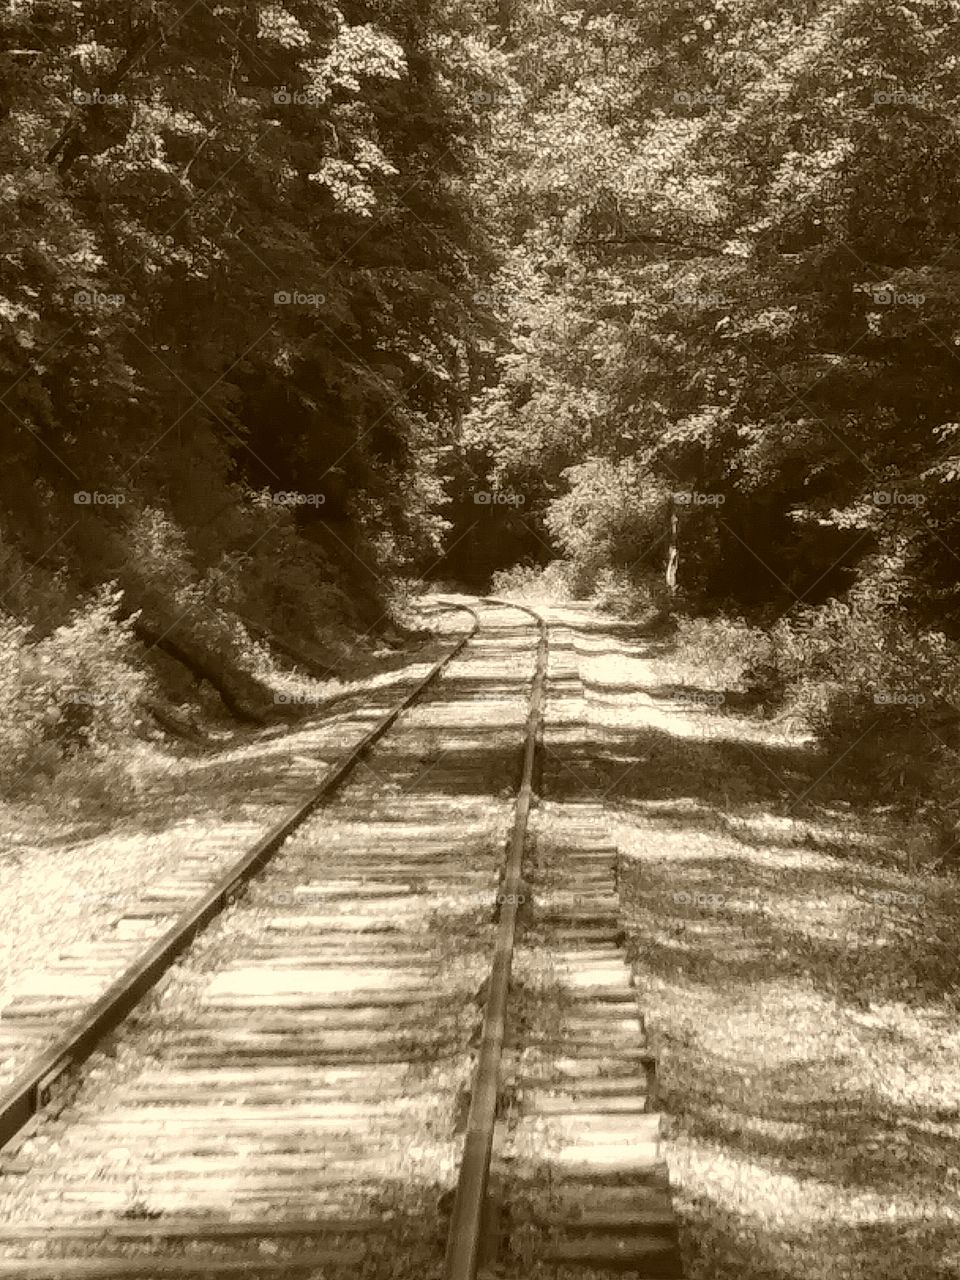 the tracks